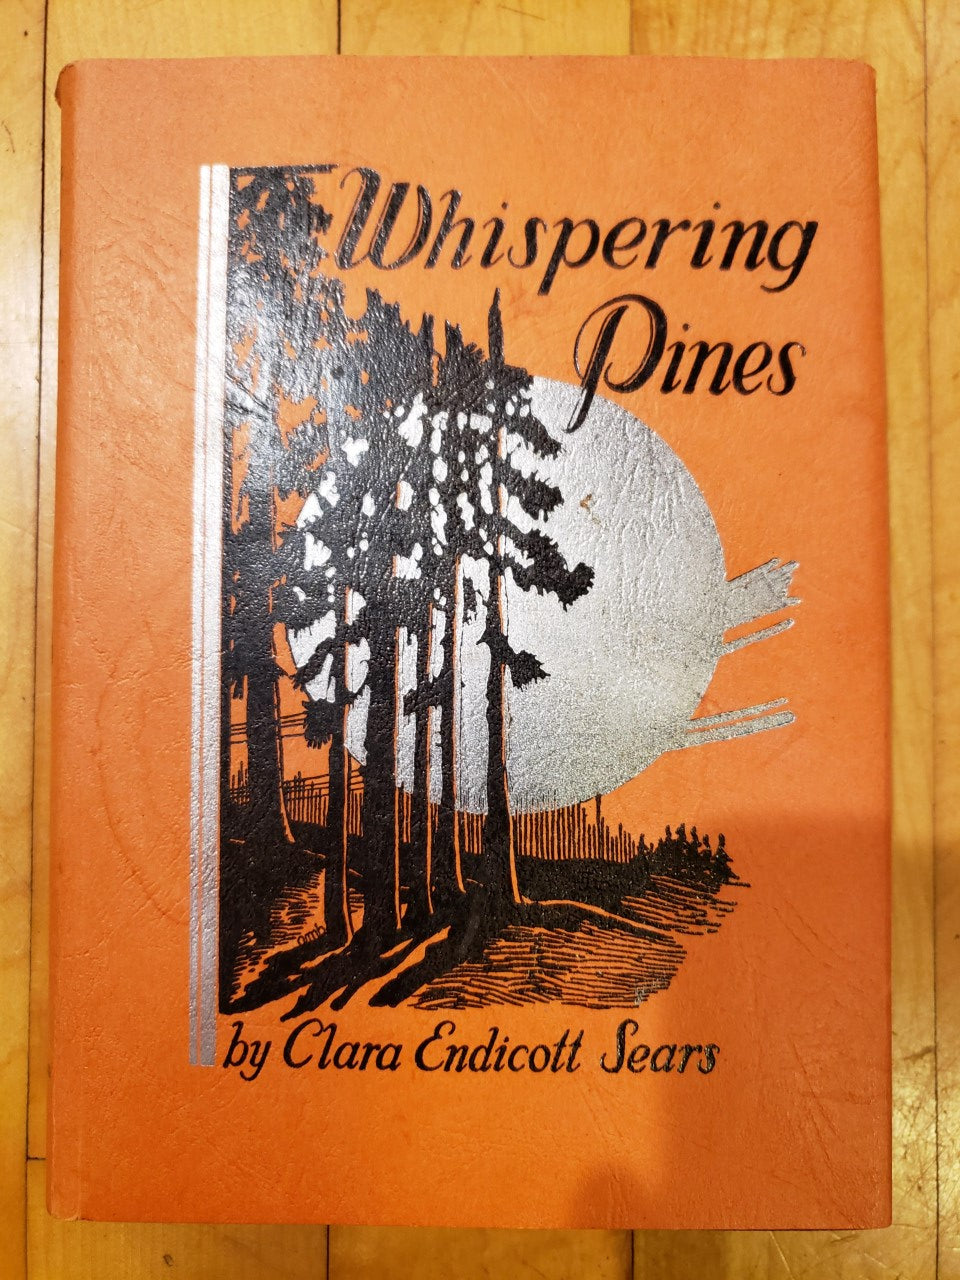 Whispering Pines by Clara Endicott Sears - printed 1930 - RARE Book